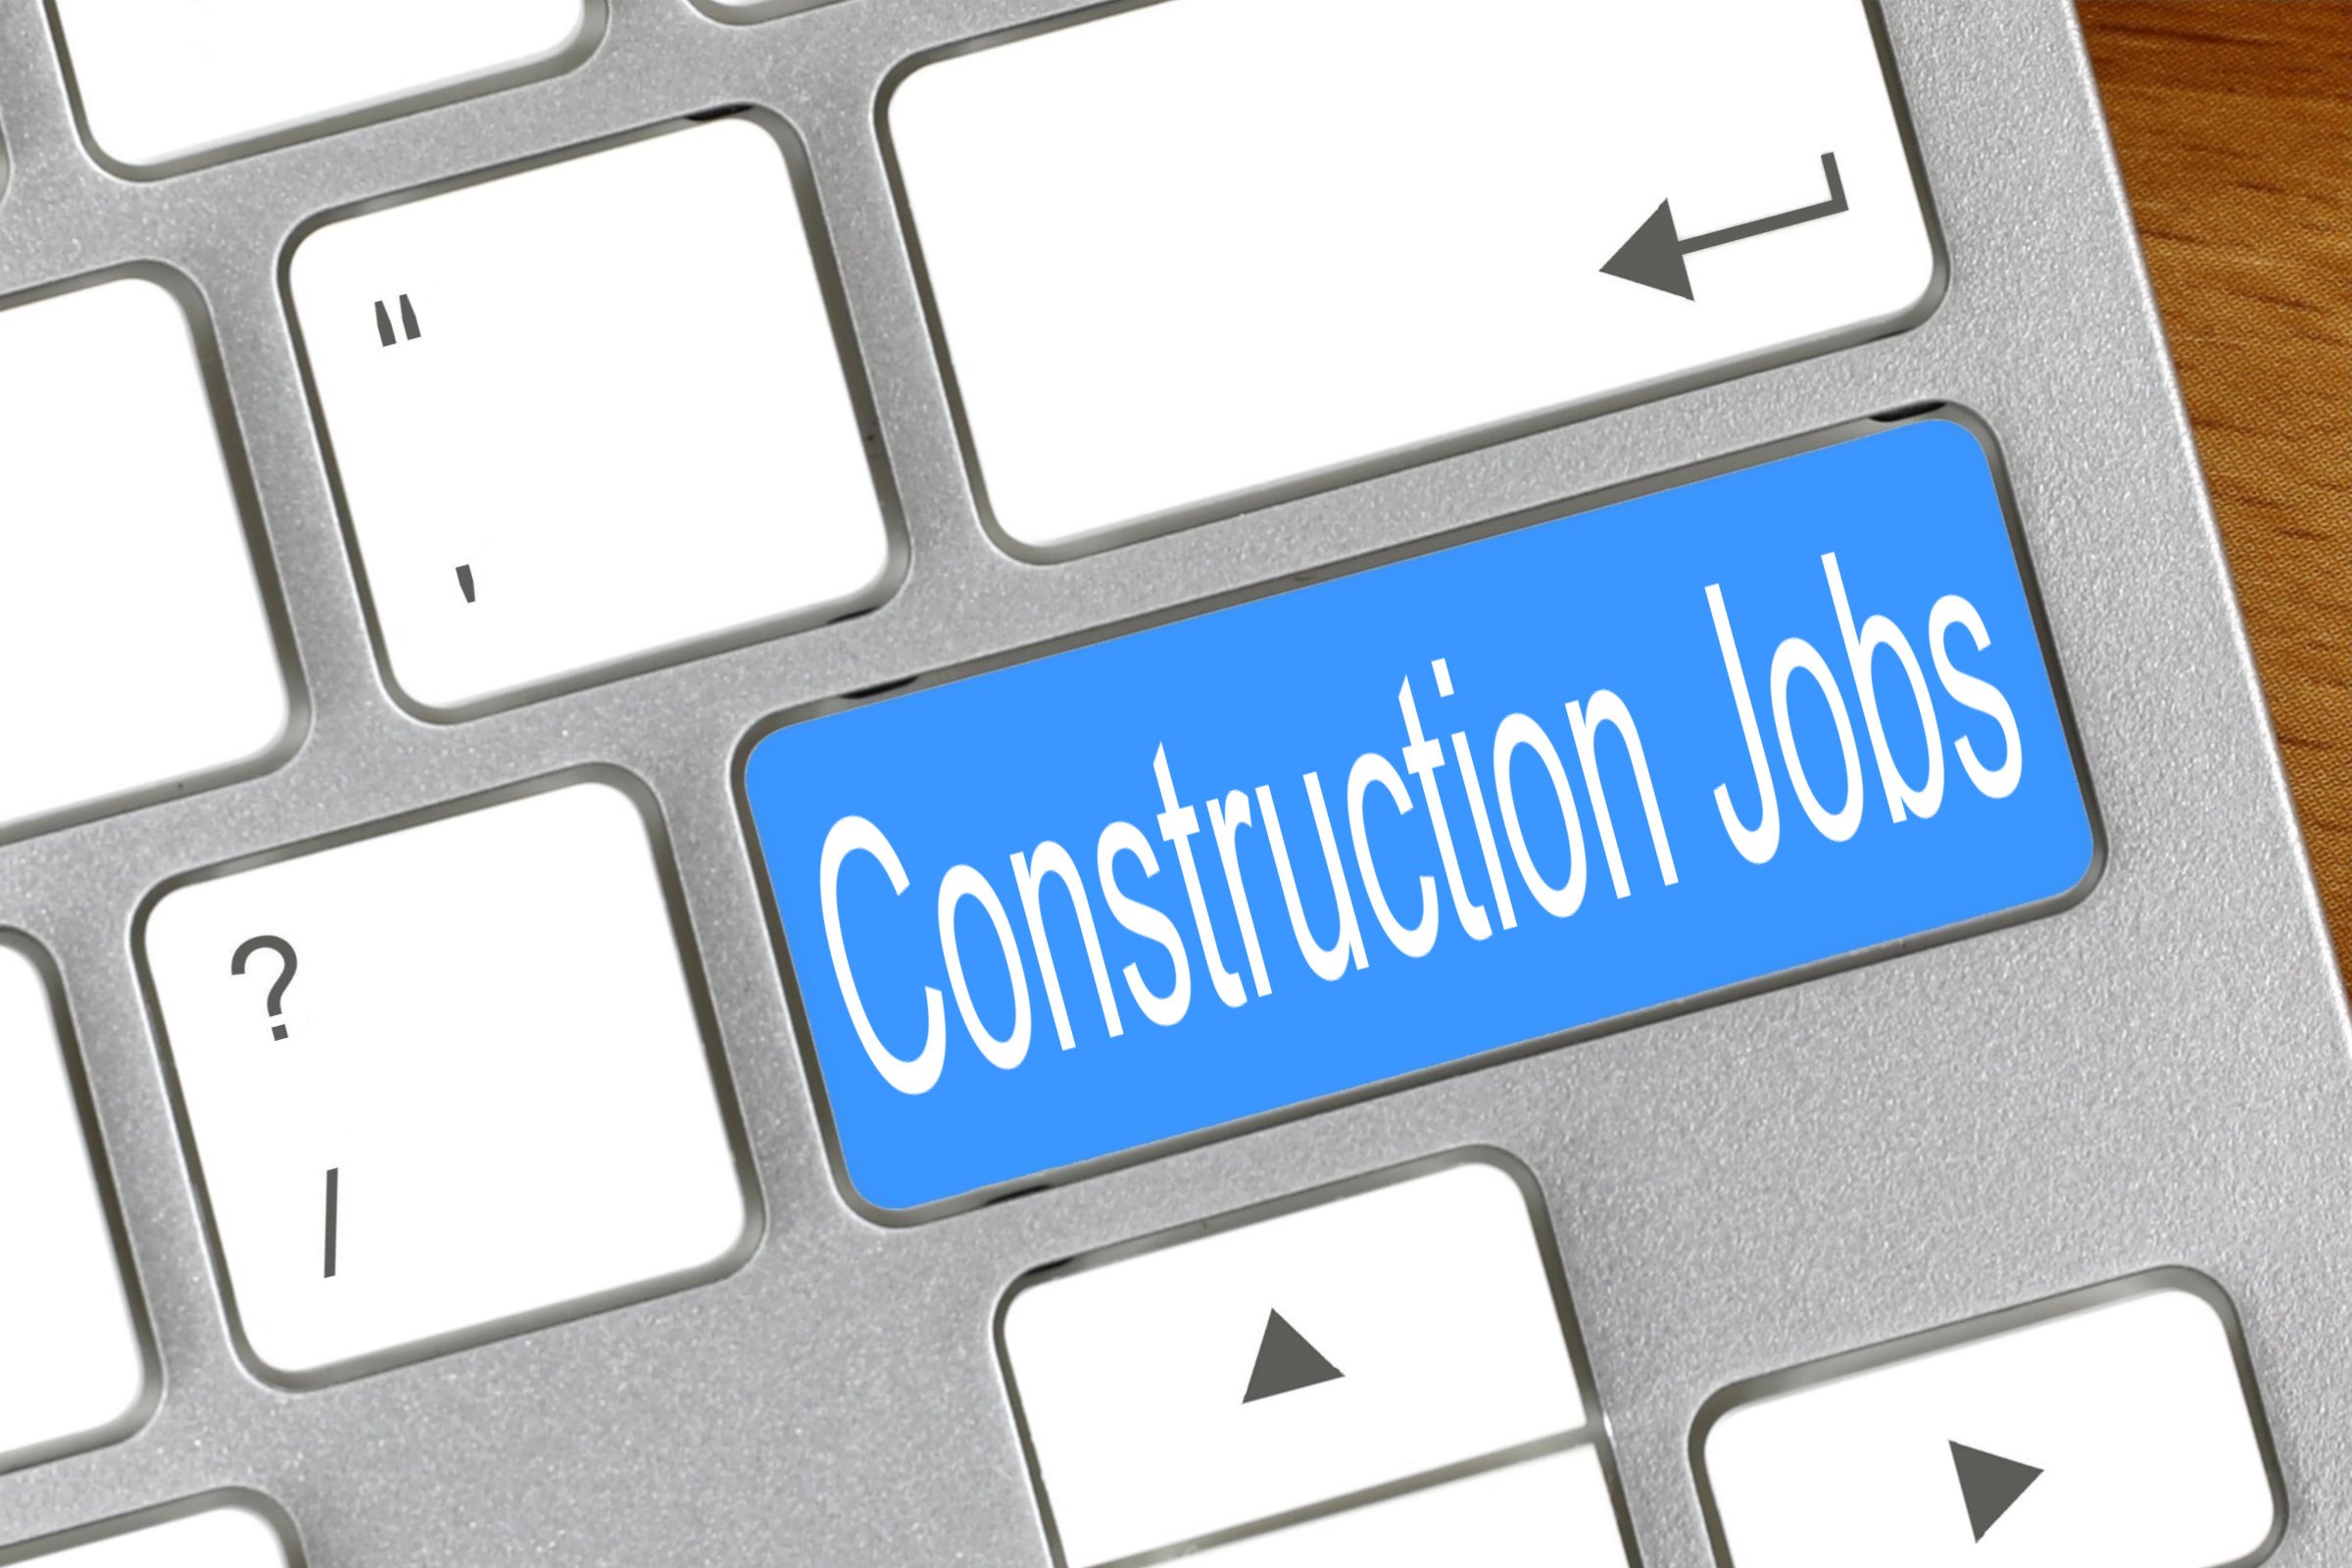 construction jobs